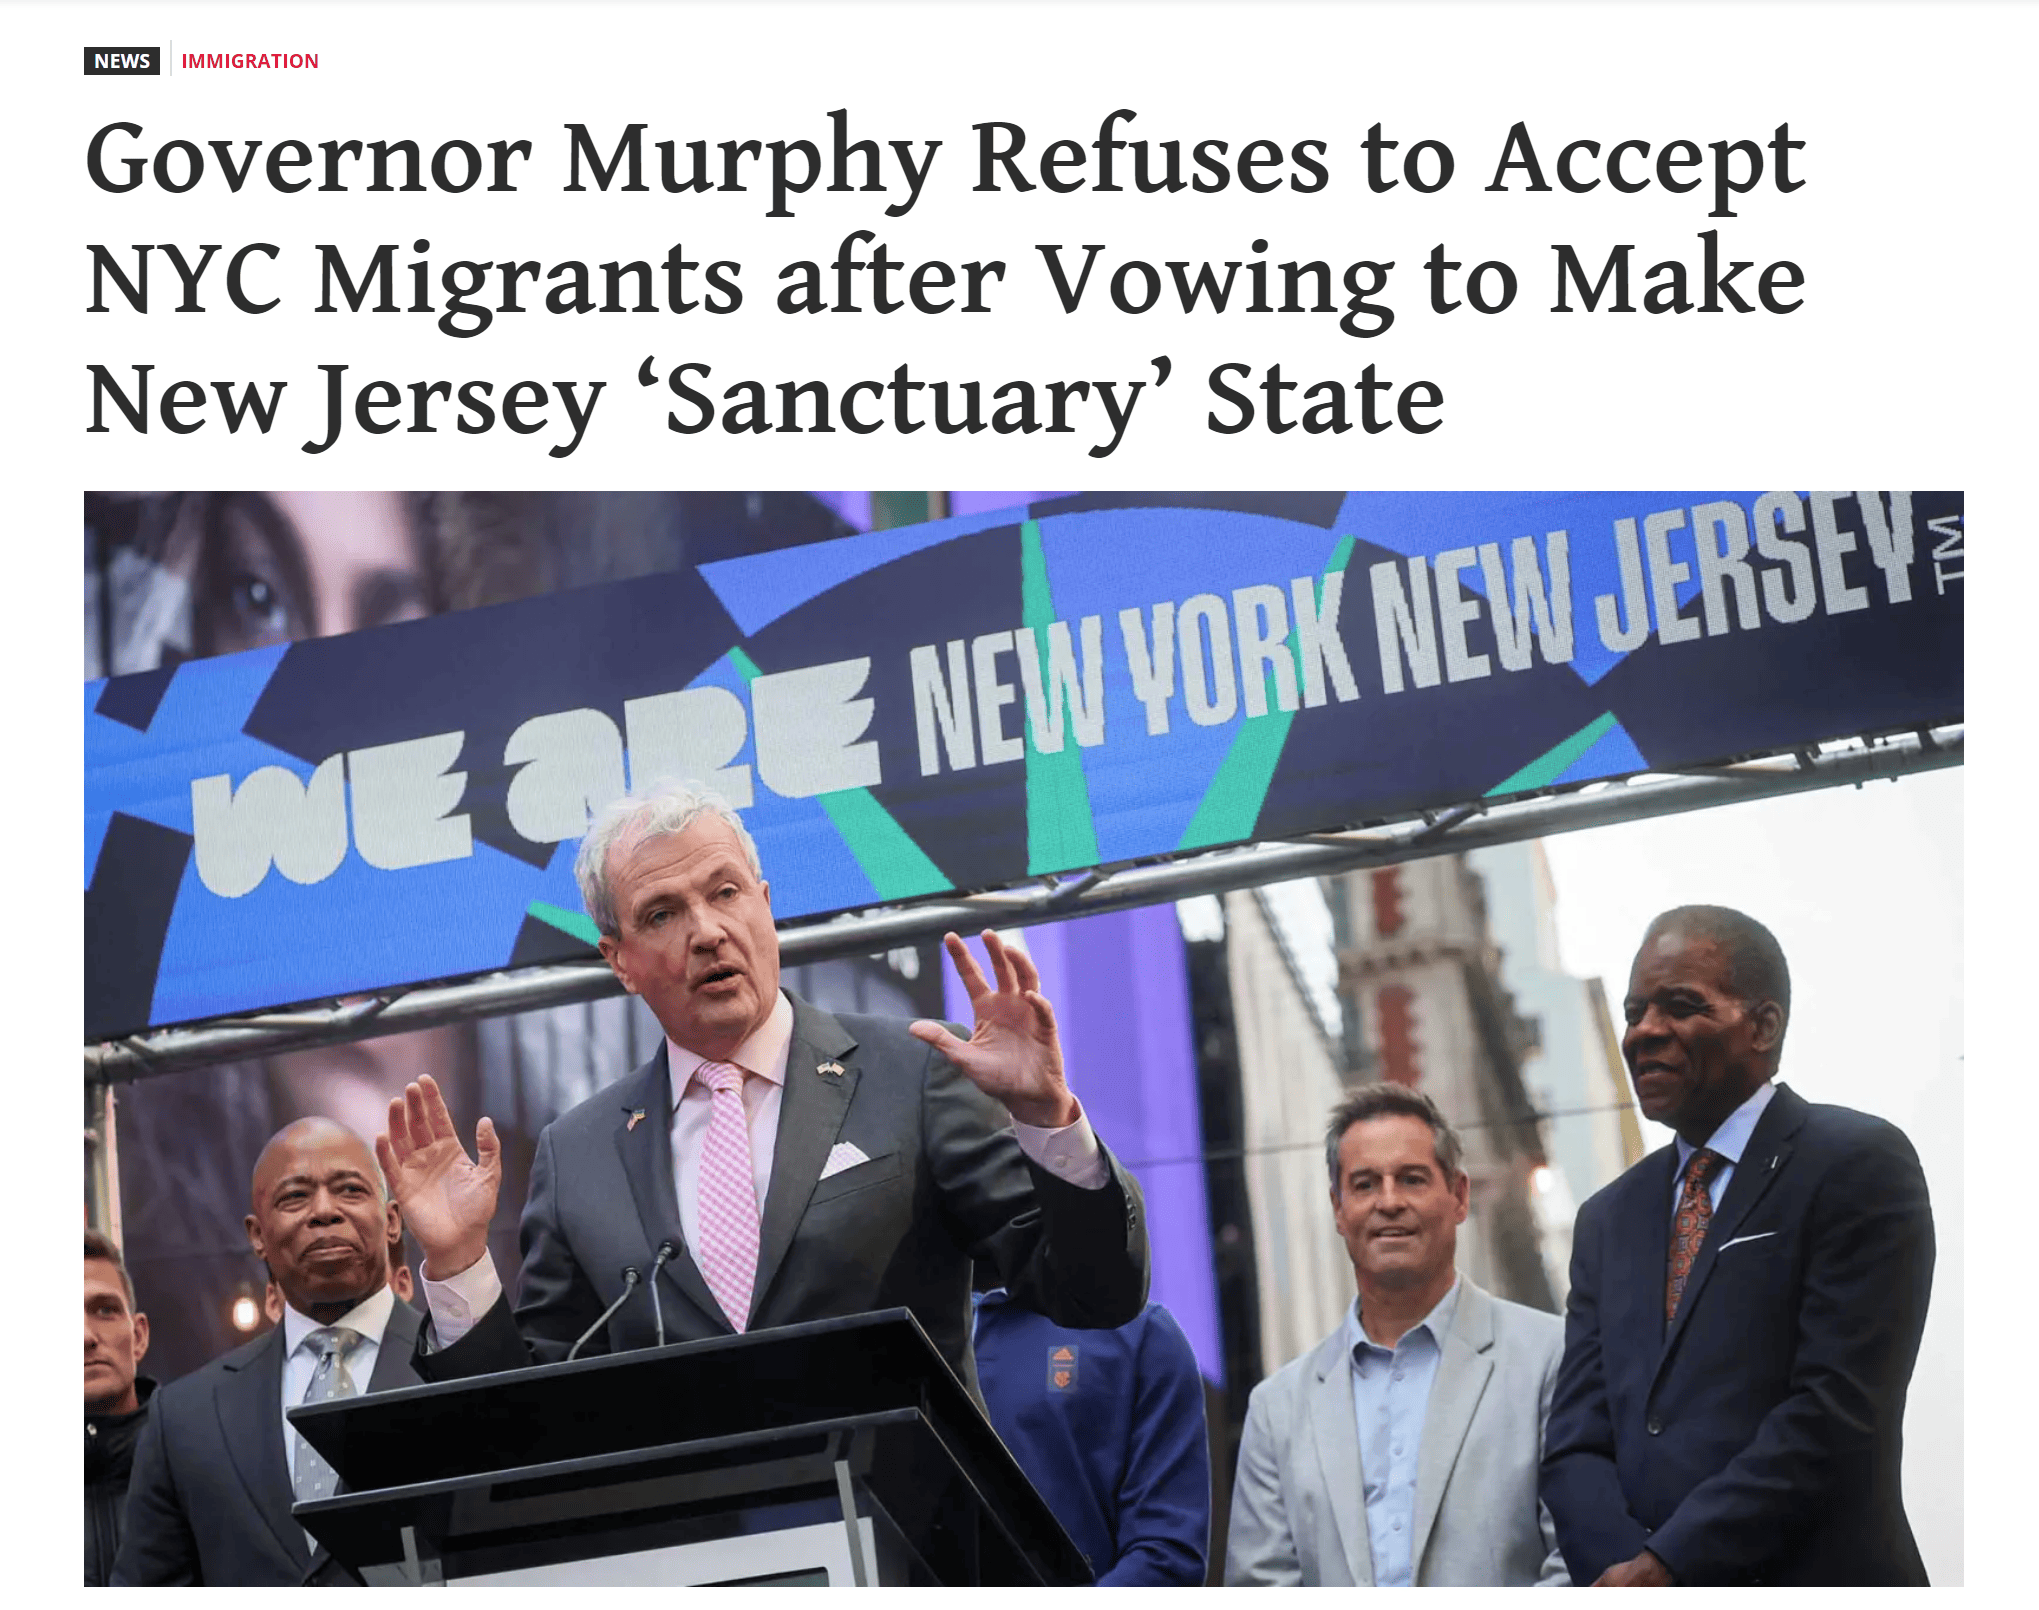 NJ Gov Murphy Supports Sanctuary State Status.